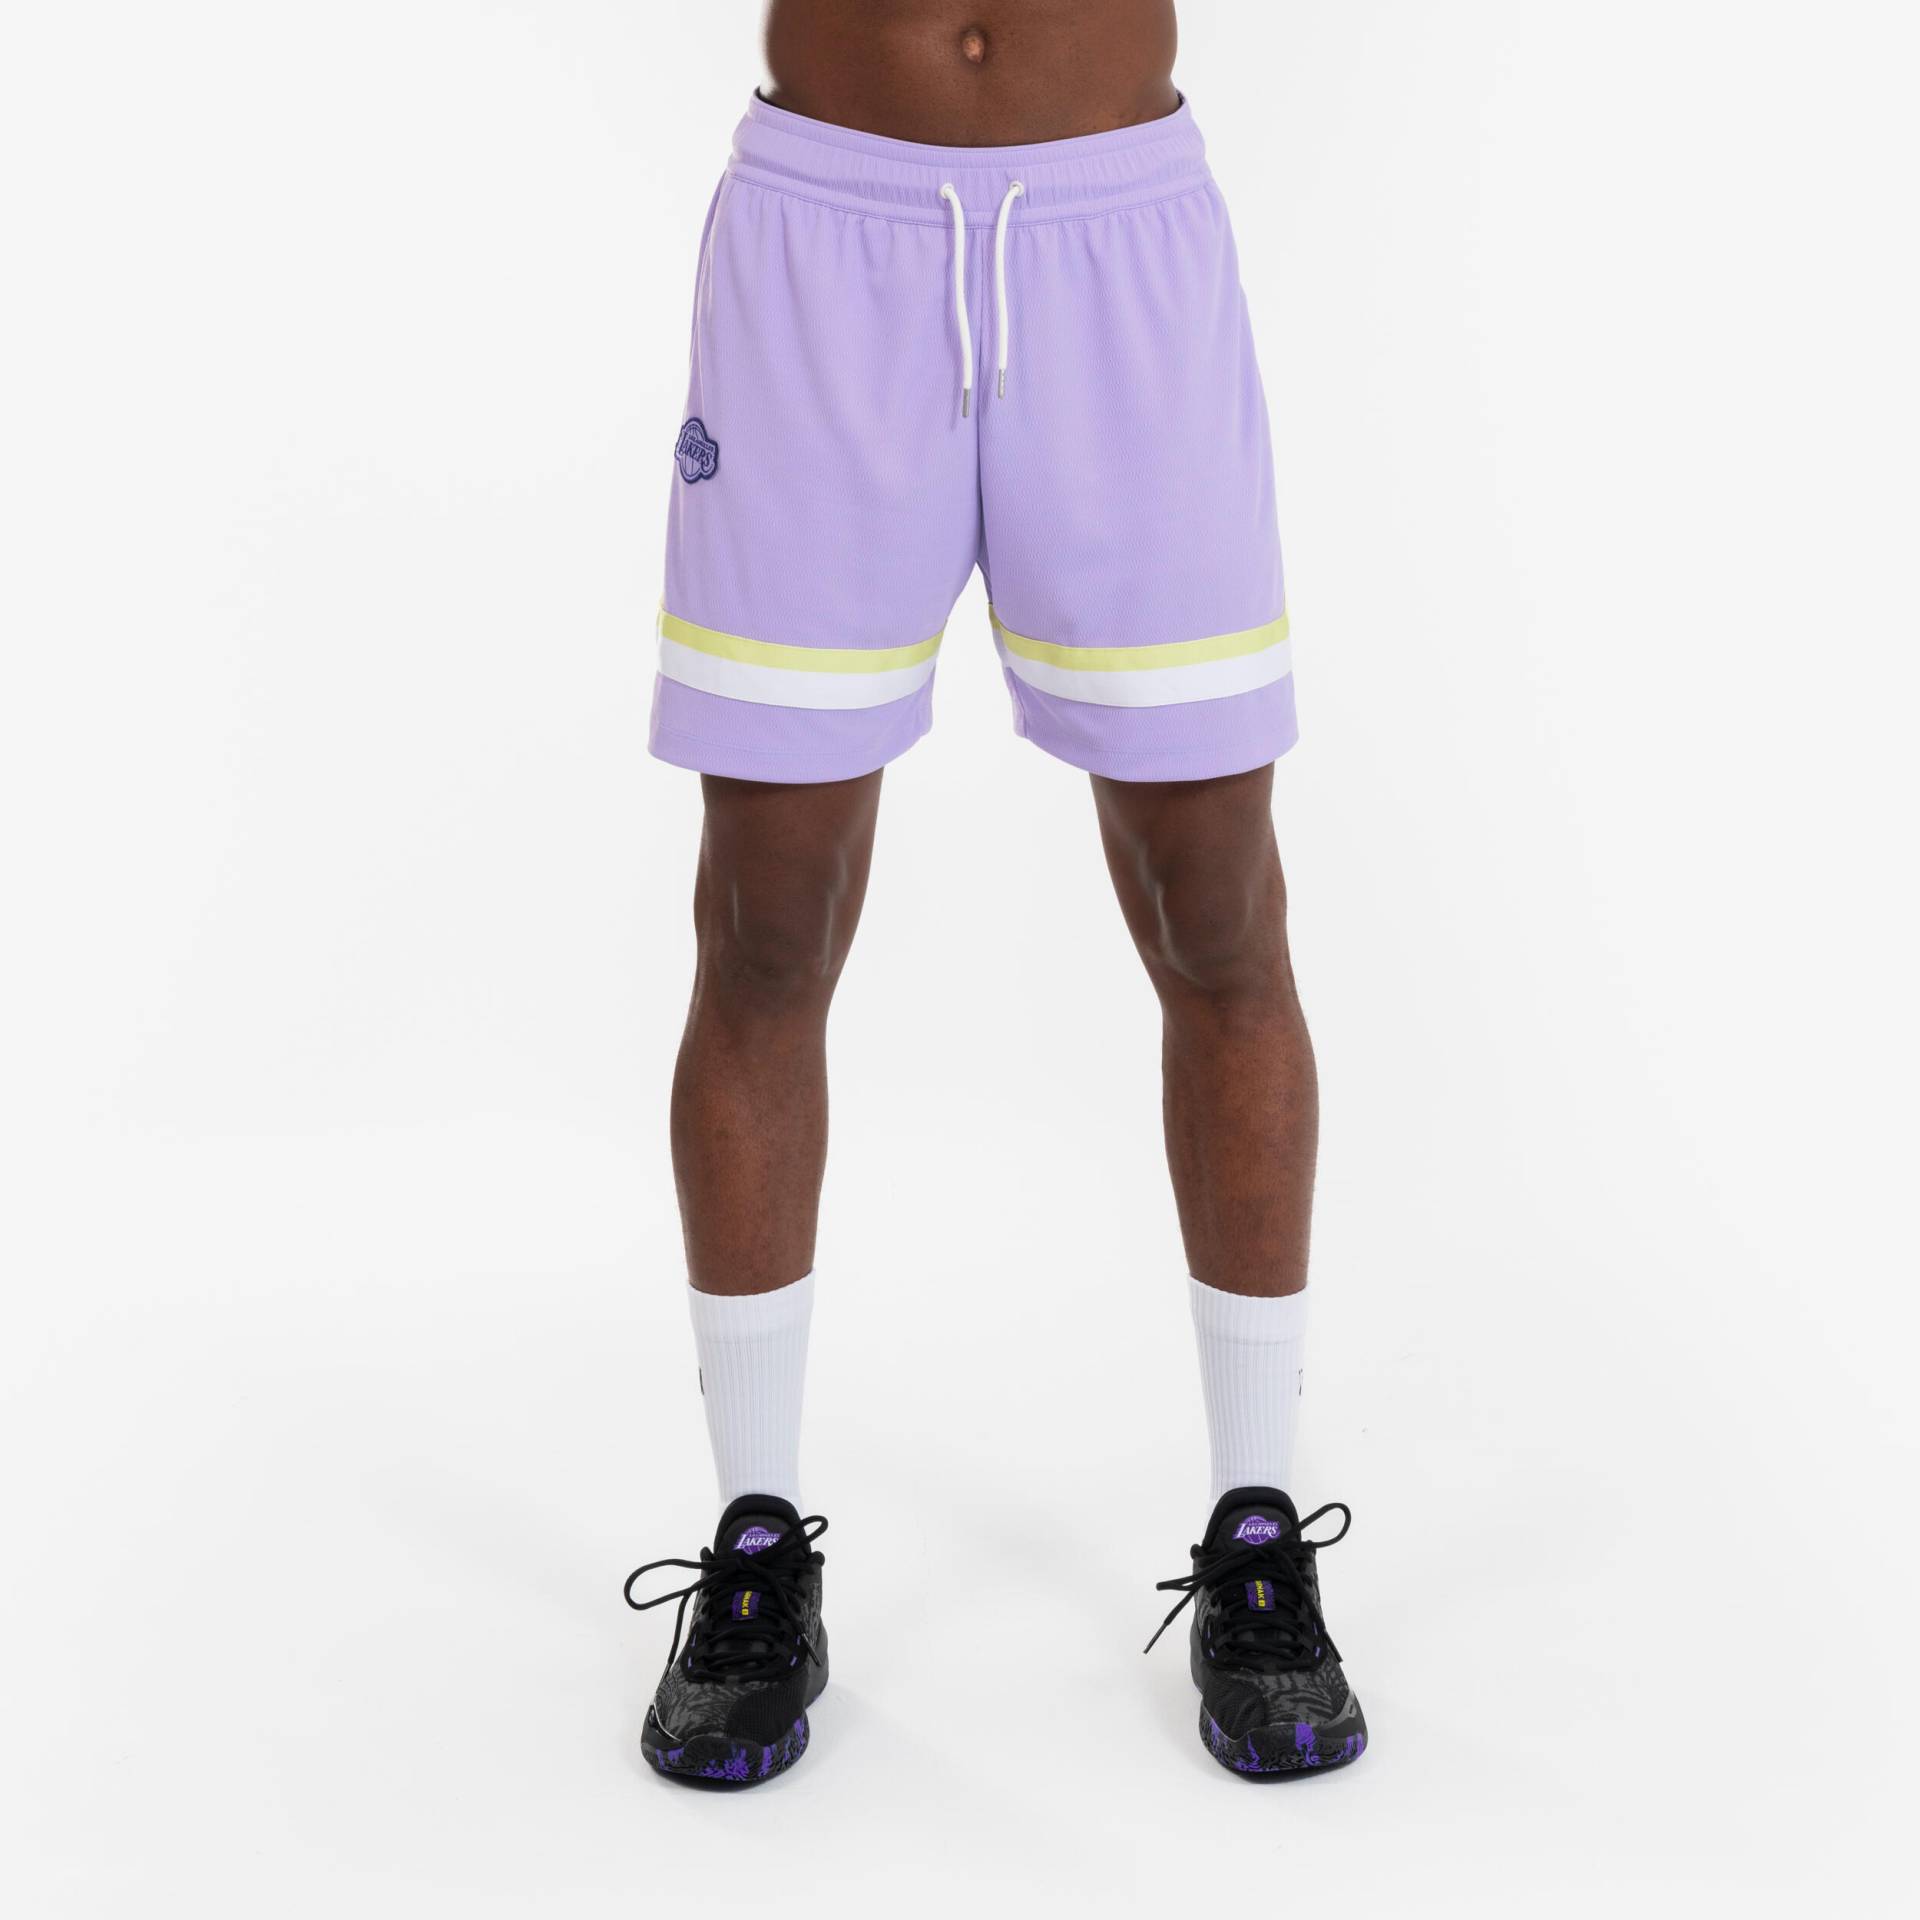 Damen/Herren Basketball Shorts NBA Lakers - SH 900 violett von TARMAK